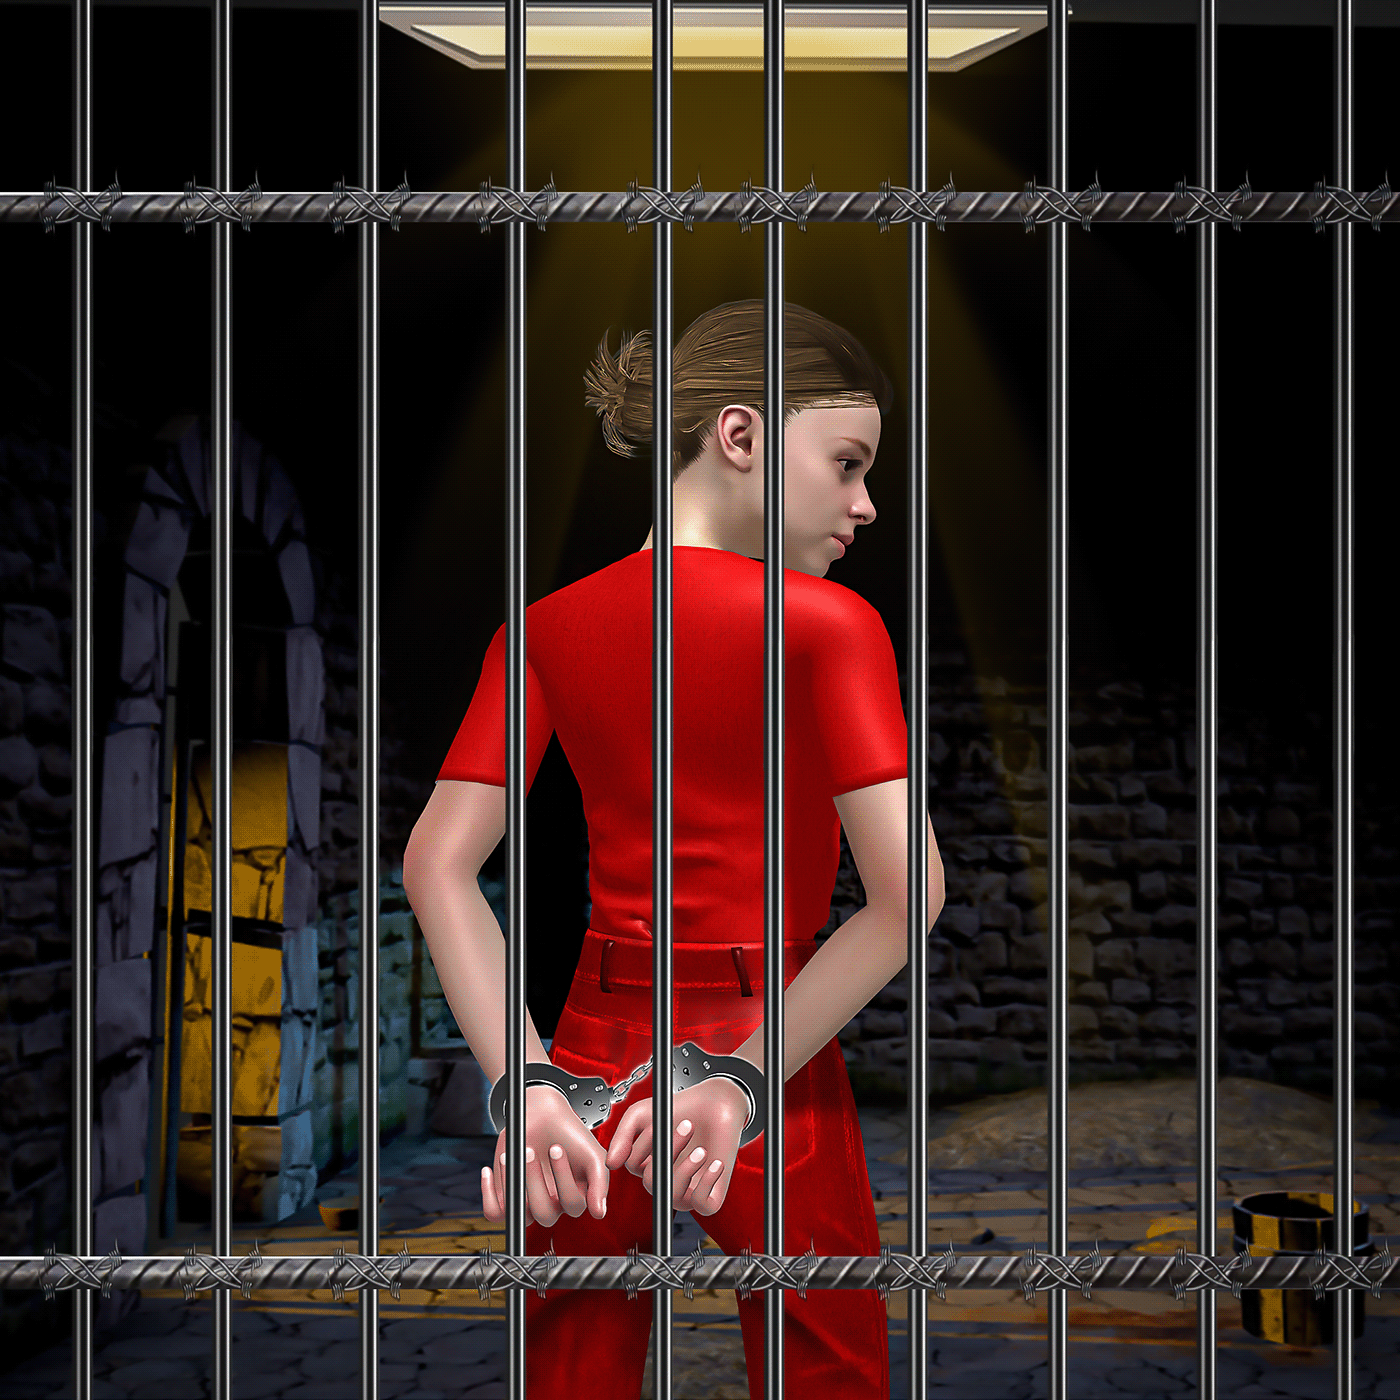 3D Cell game Games Jail jailbreak prison Prisoner Render rendering